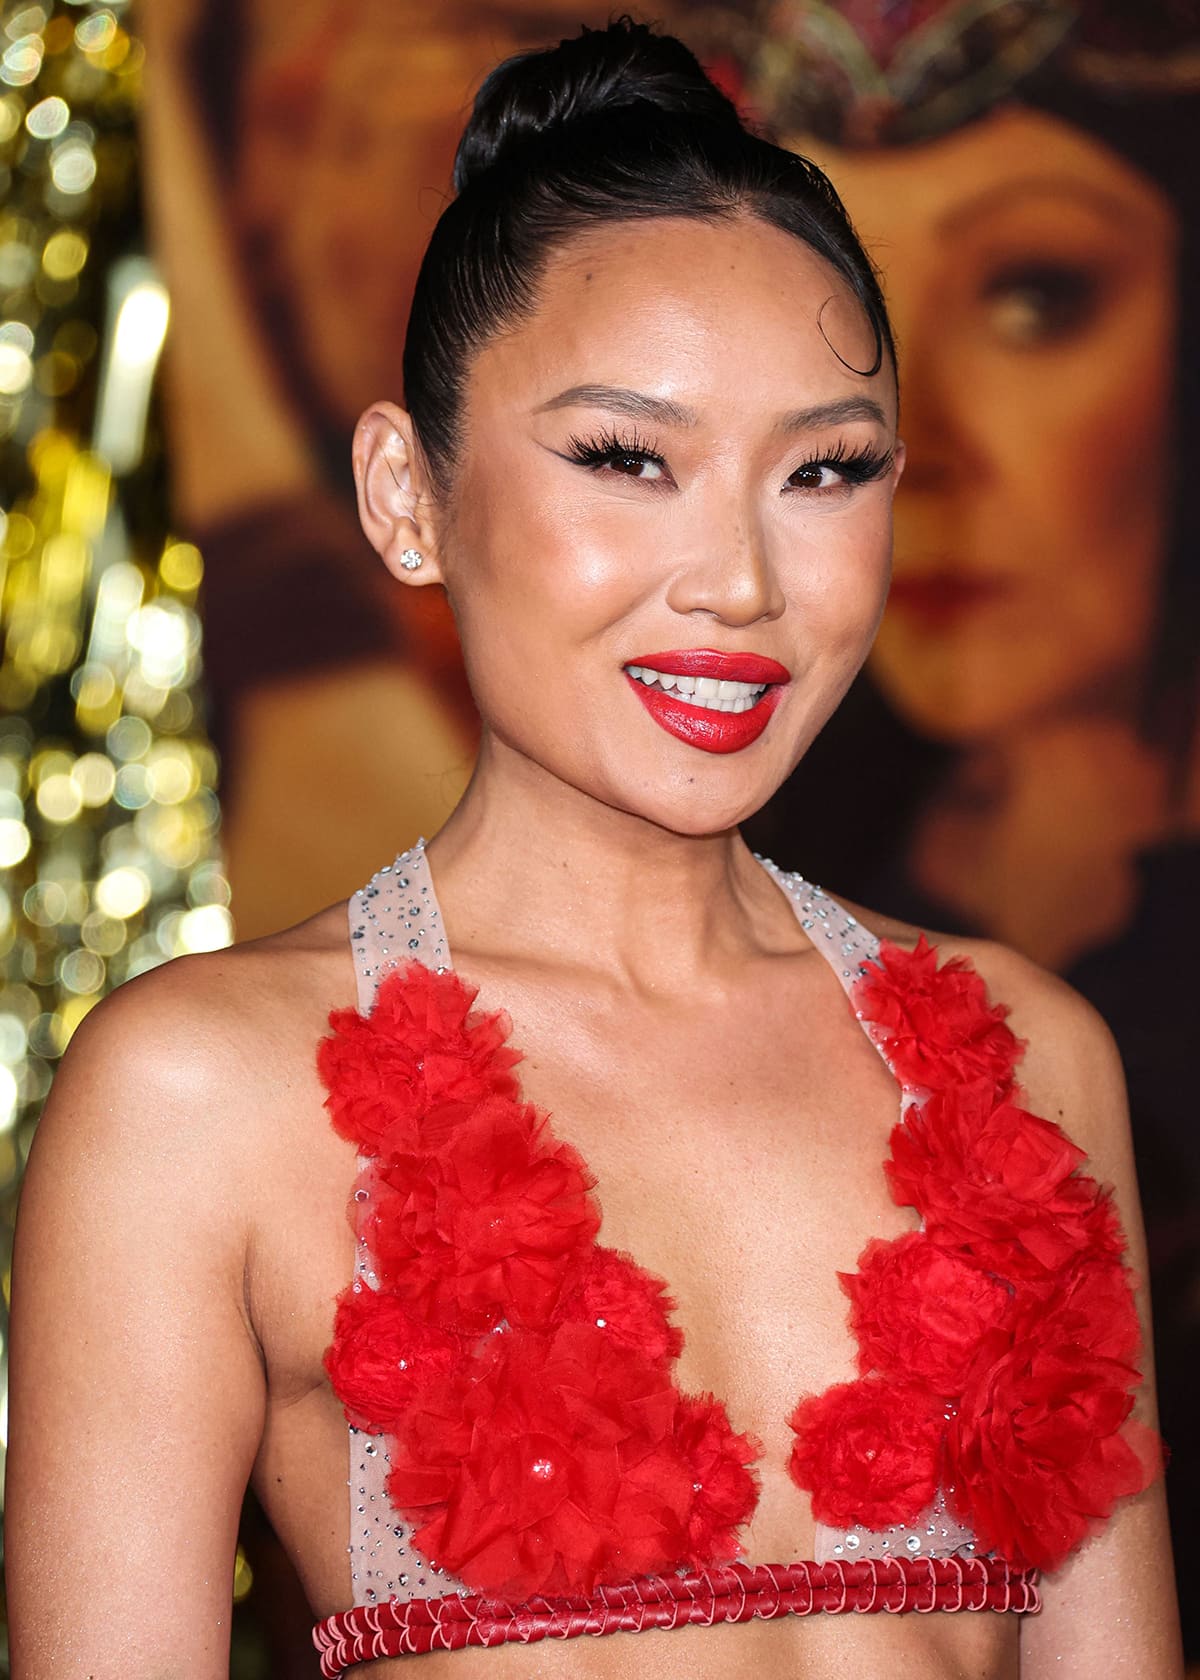 Li Jun Li wears HausLabs makeup, with red coral lipstick, winged eyeliner, and bronzed eyeshadow